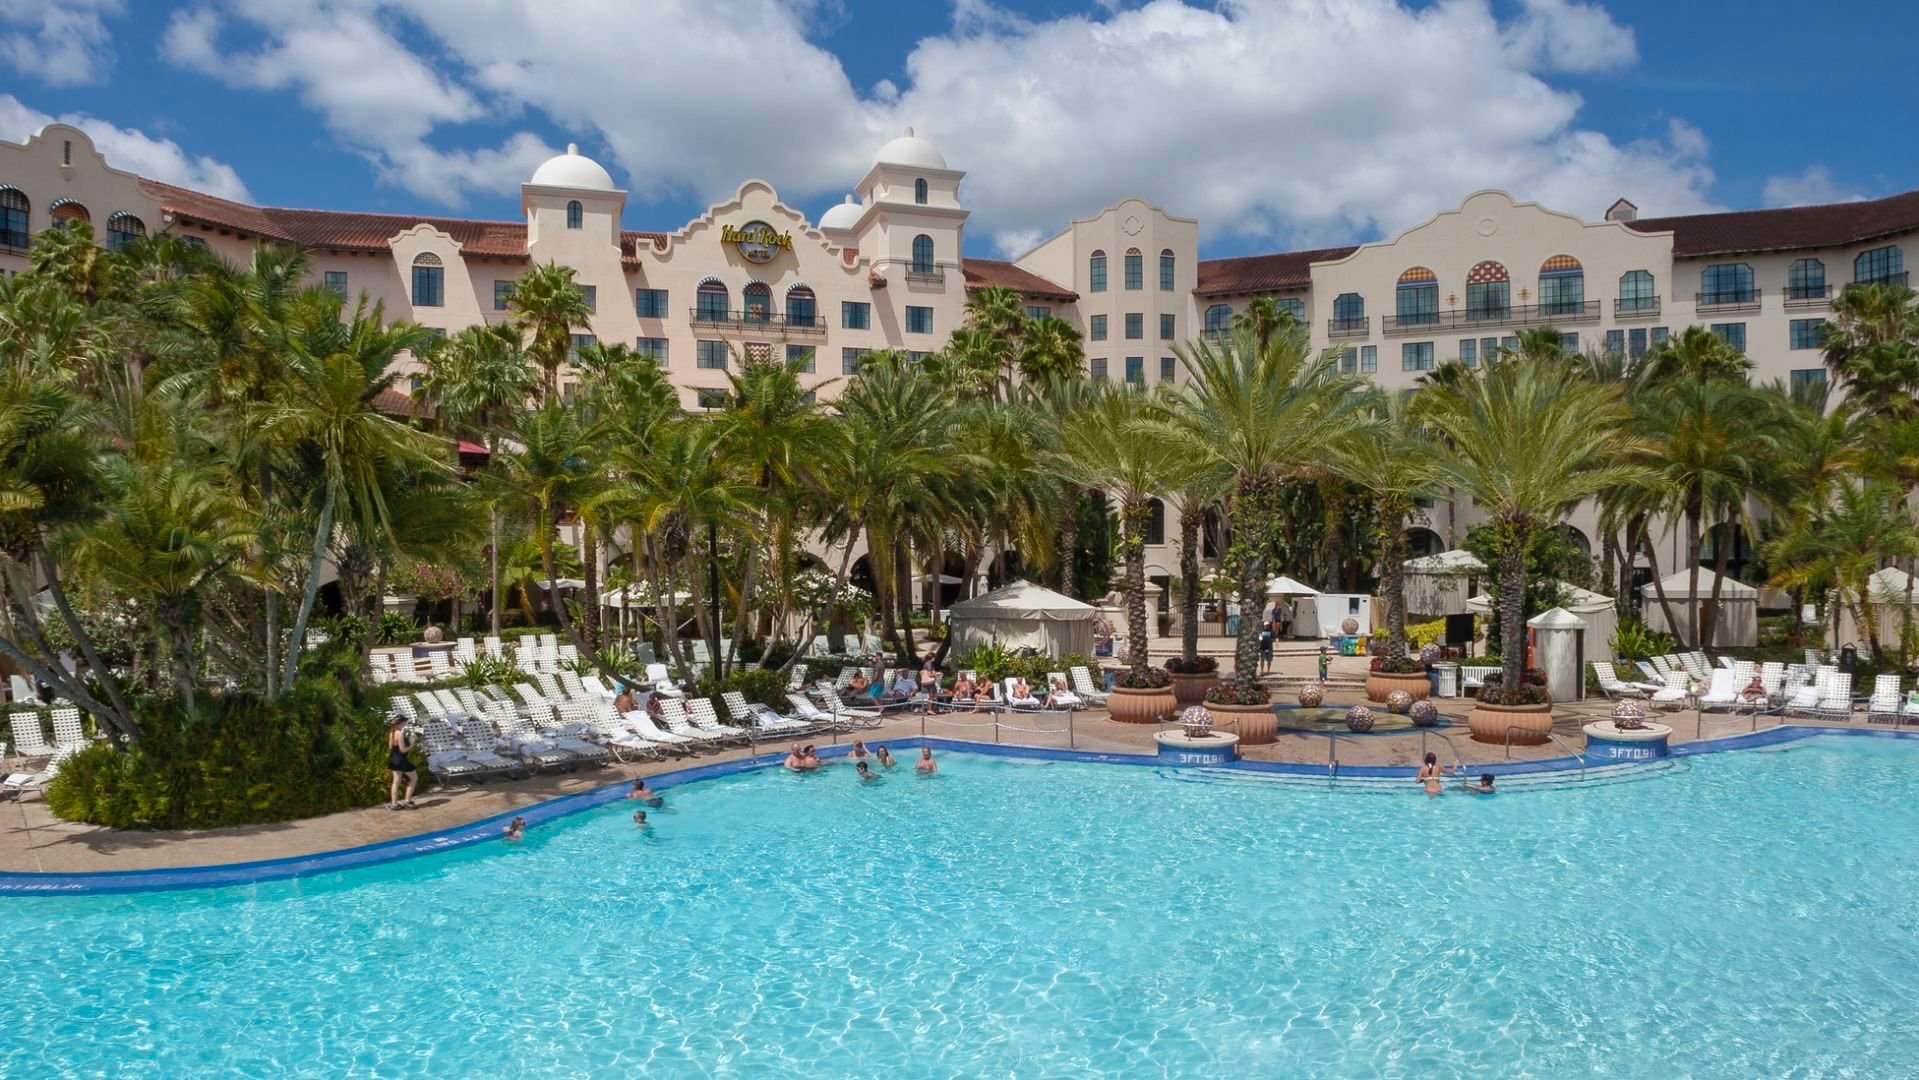 Universal Orlando Resort Park Maps - Universal Studios Orlando Vacation  Packages, Discounts, Hotels, Park Tickets